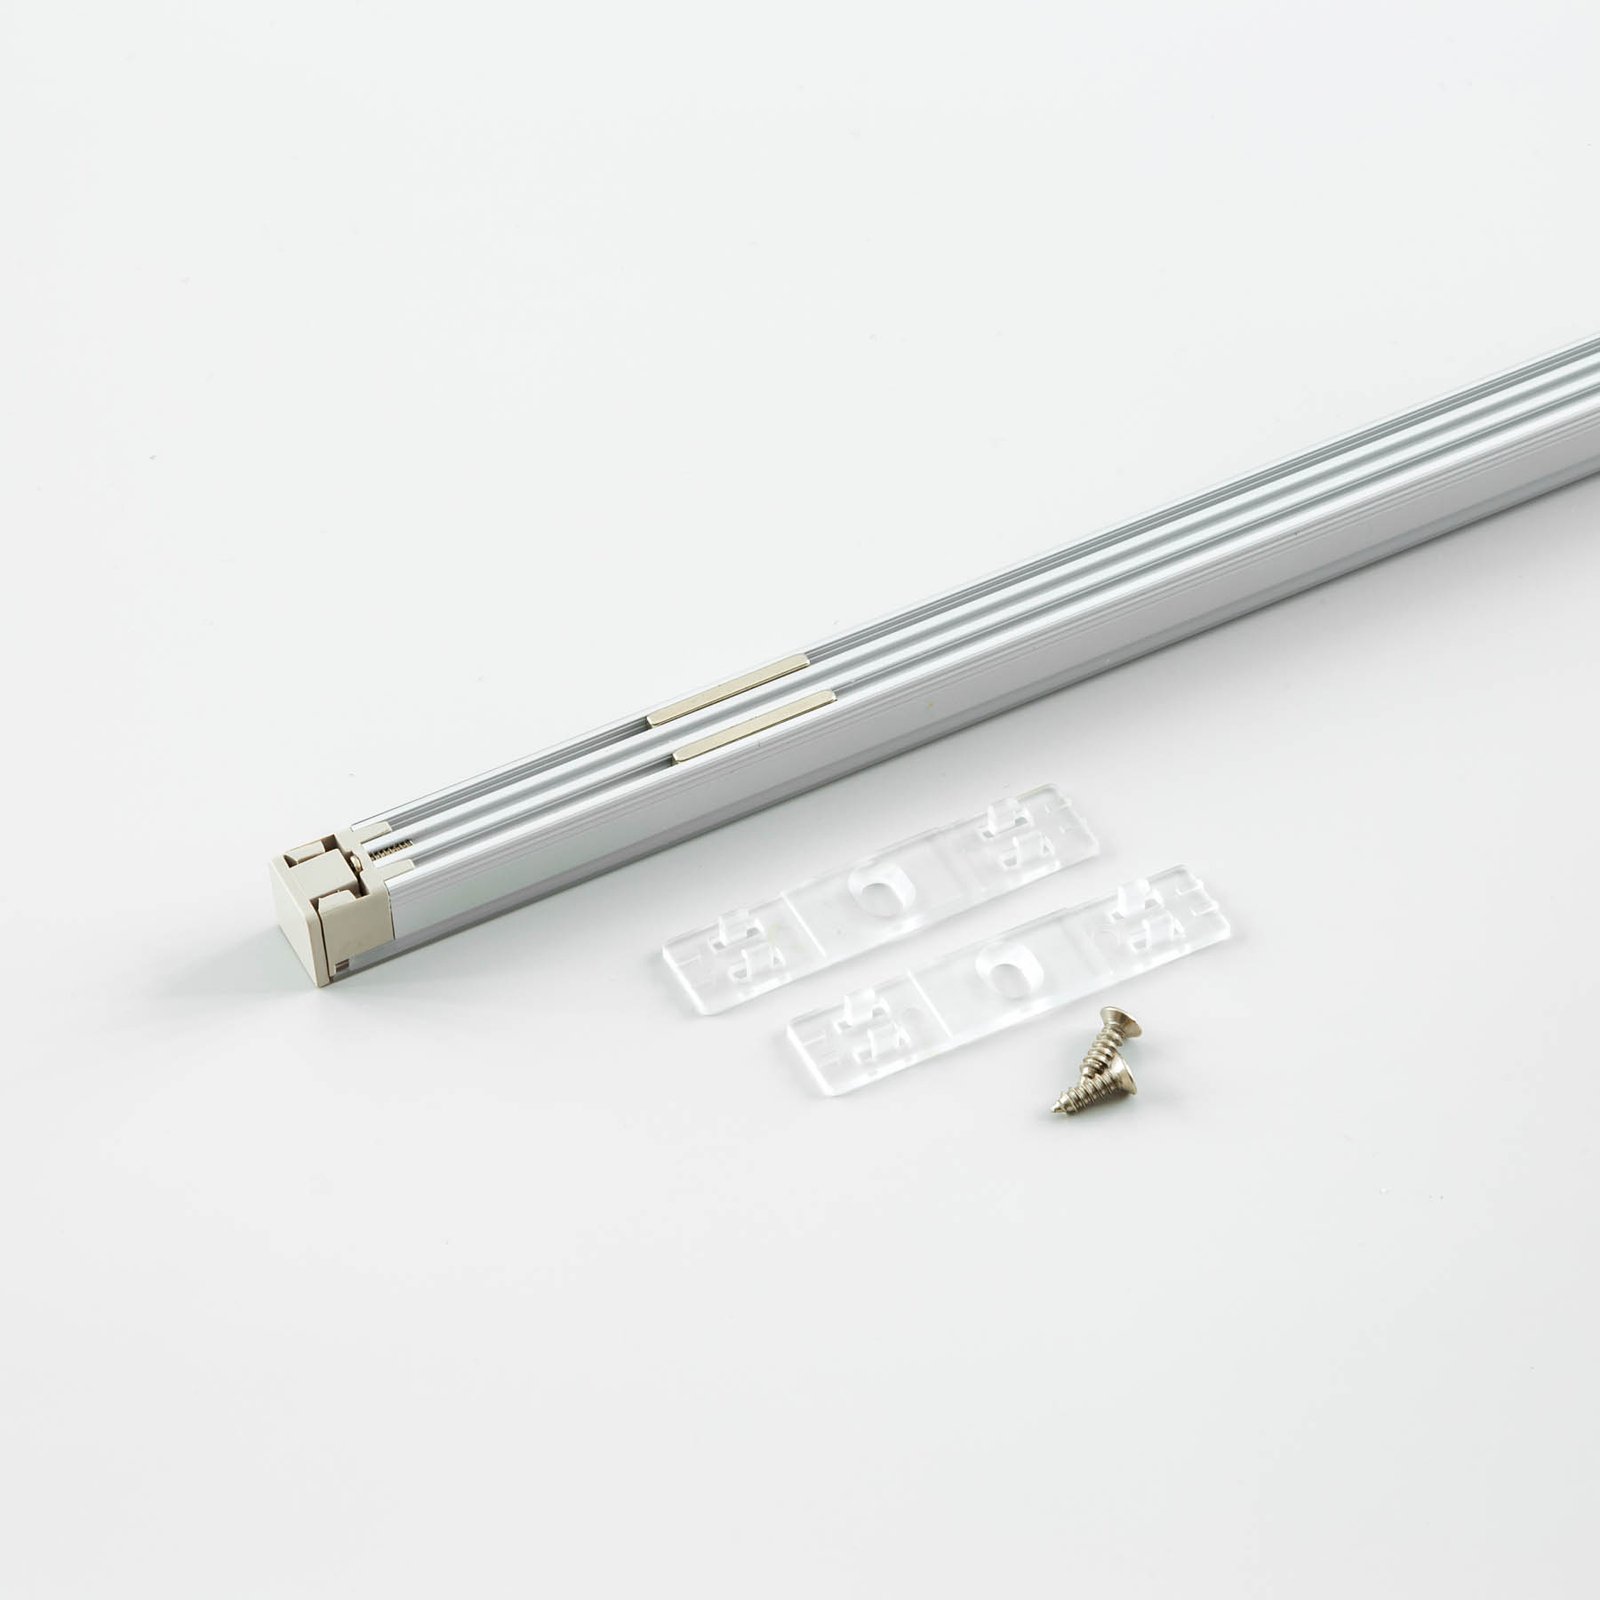 Luminaire LED en saillie Bordo alu, longueur 59 cm